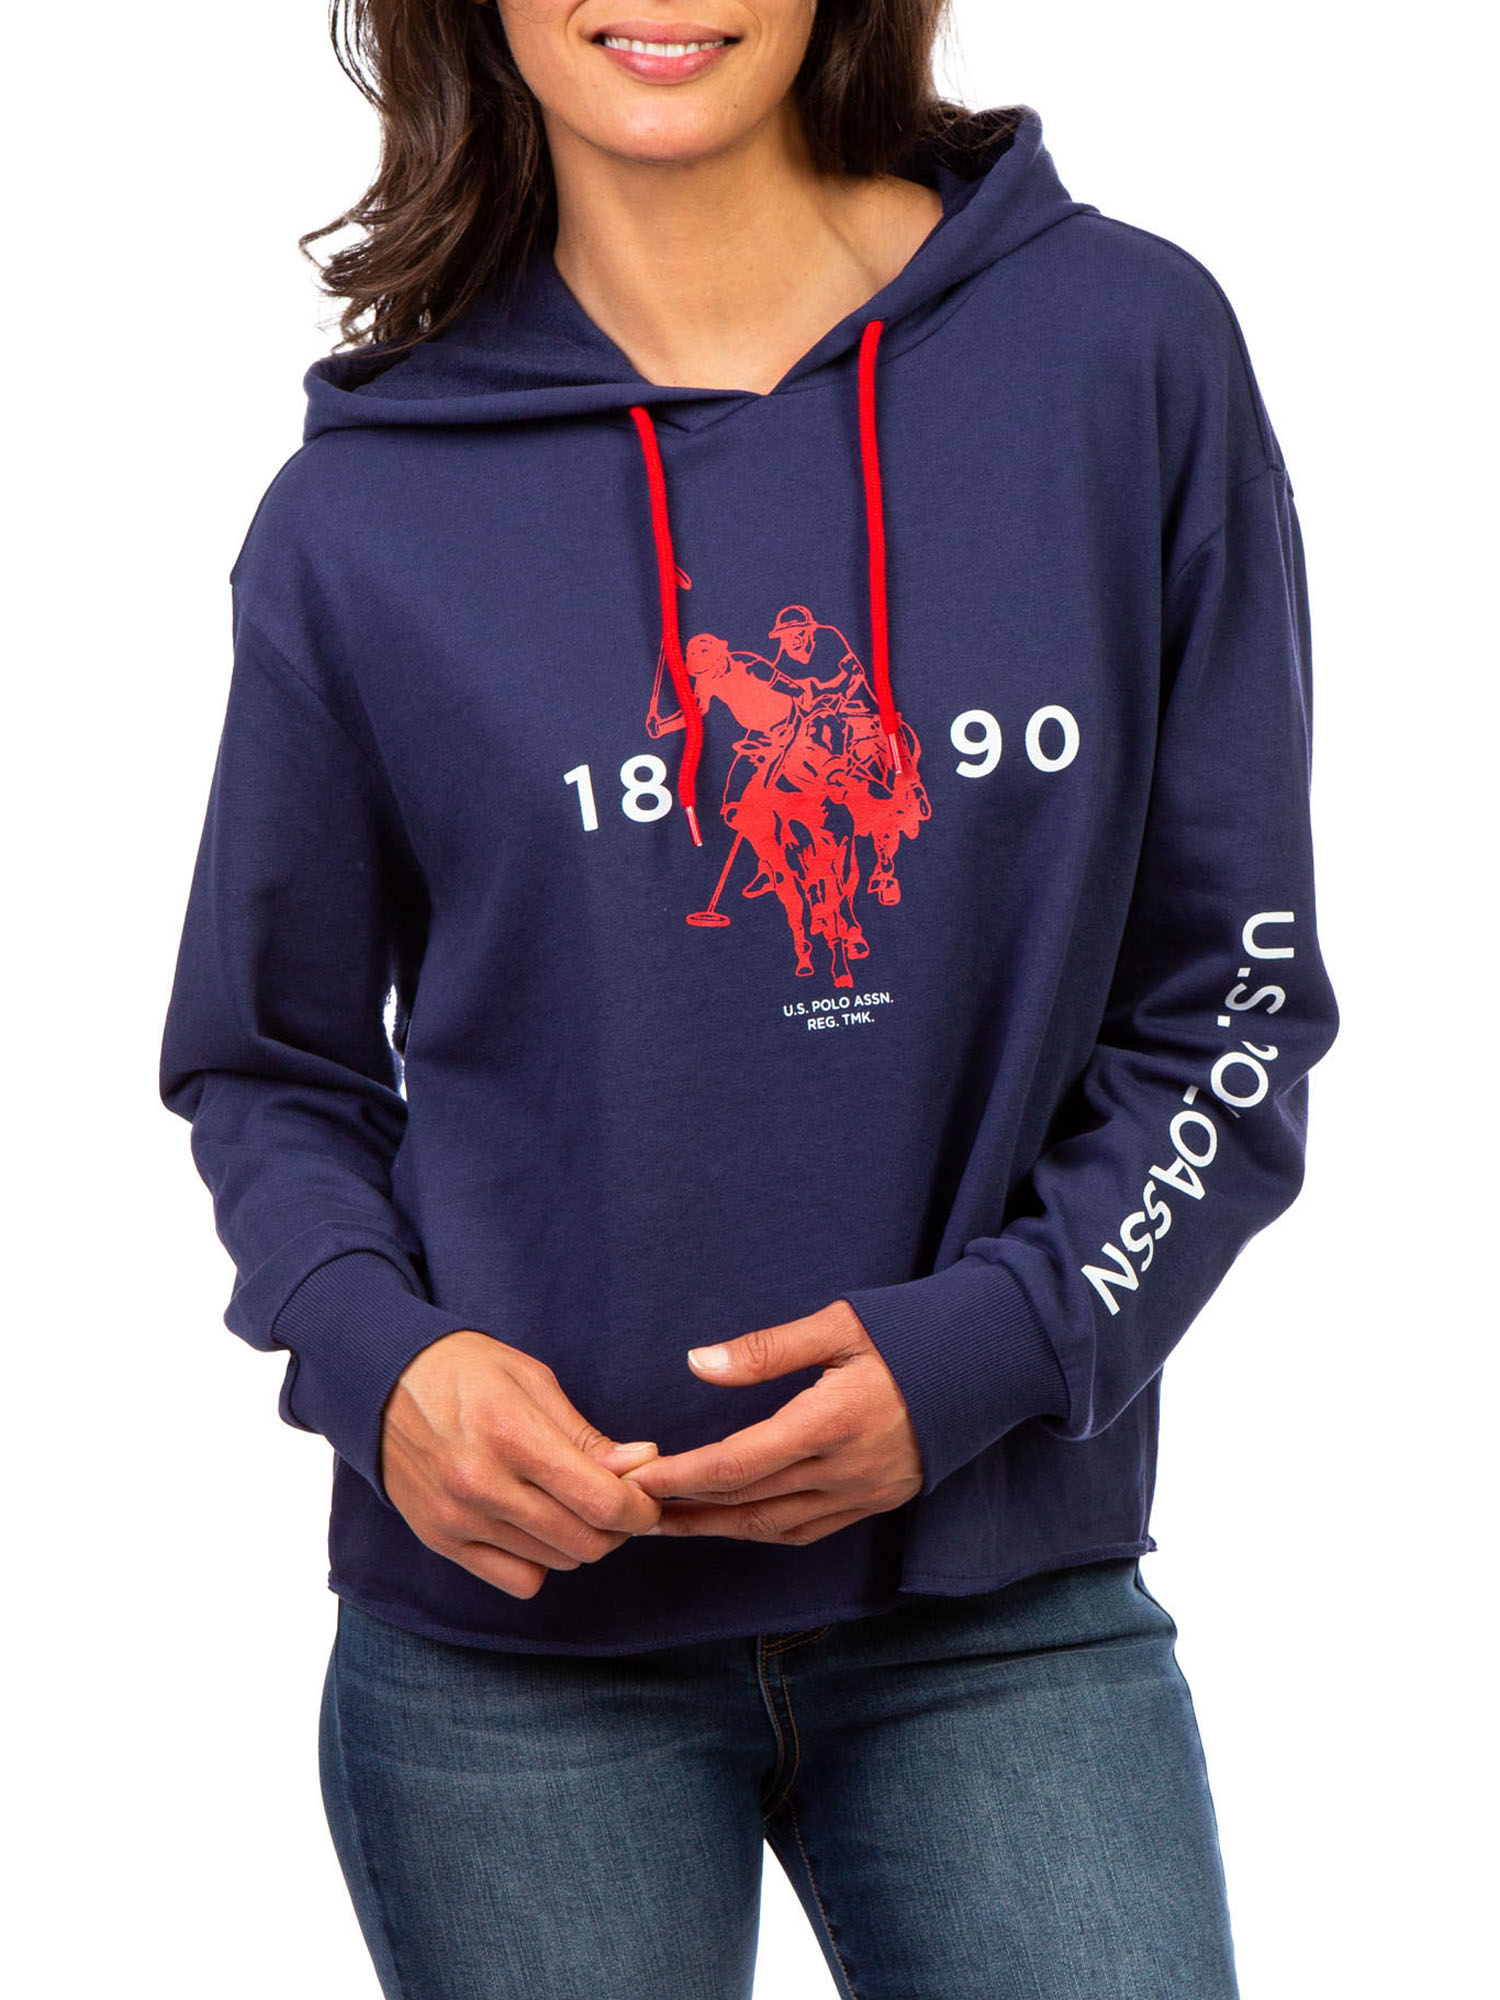 U.S. Polo Assn. Meet & Greet Logo Sweatshirt Women's - image 5 of 5